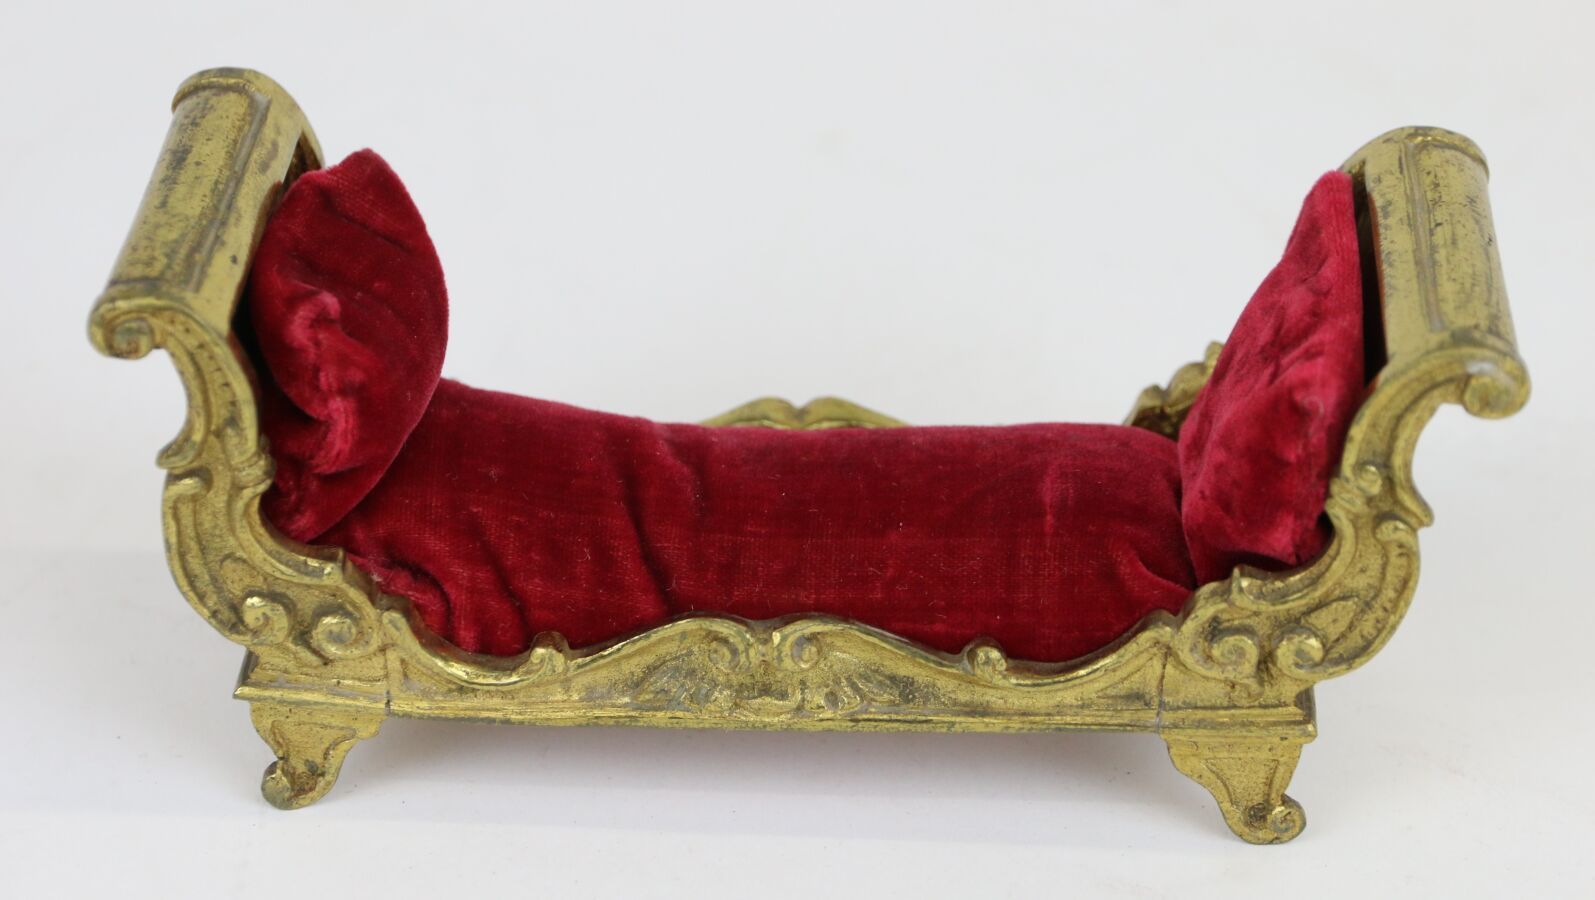 Null 迷你型金银器凹室床，四只弧形床脚上有罗凯尔装饰。
红色天鹅绒软垫。19 世纪作品
尺寸：6.5 x 14.5 x 5 厘米